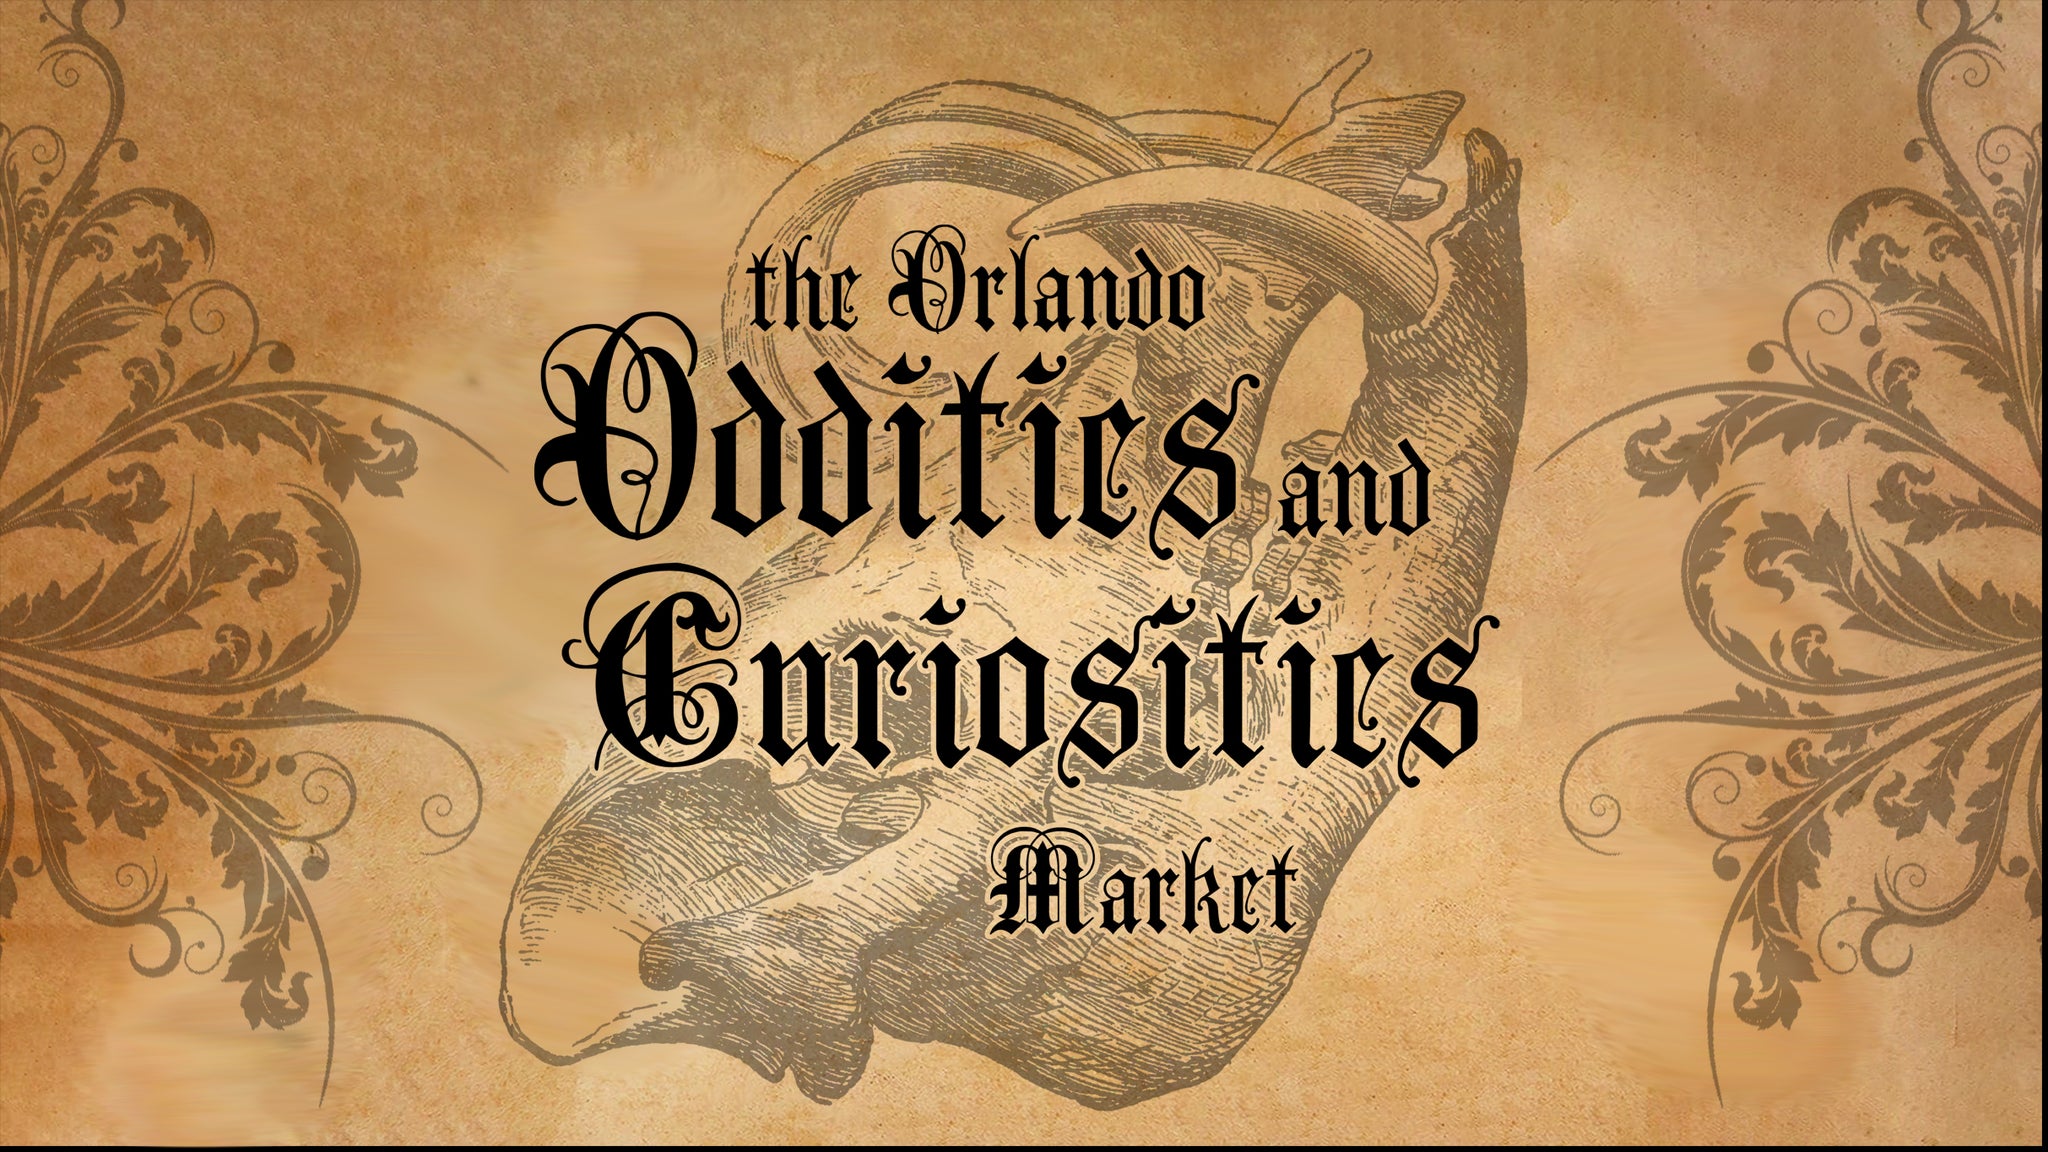 Orlando Oddities and Curiosities Market 